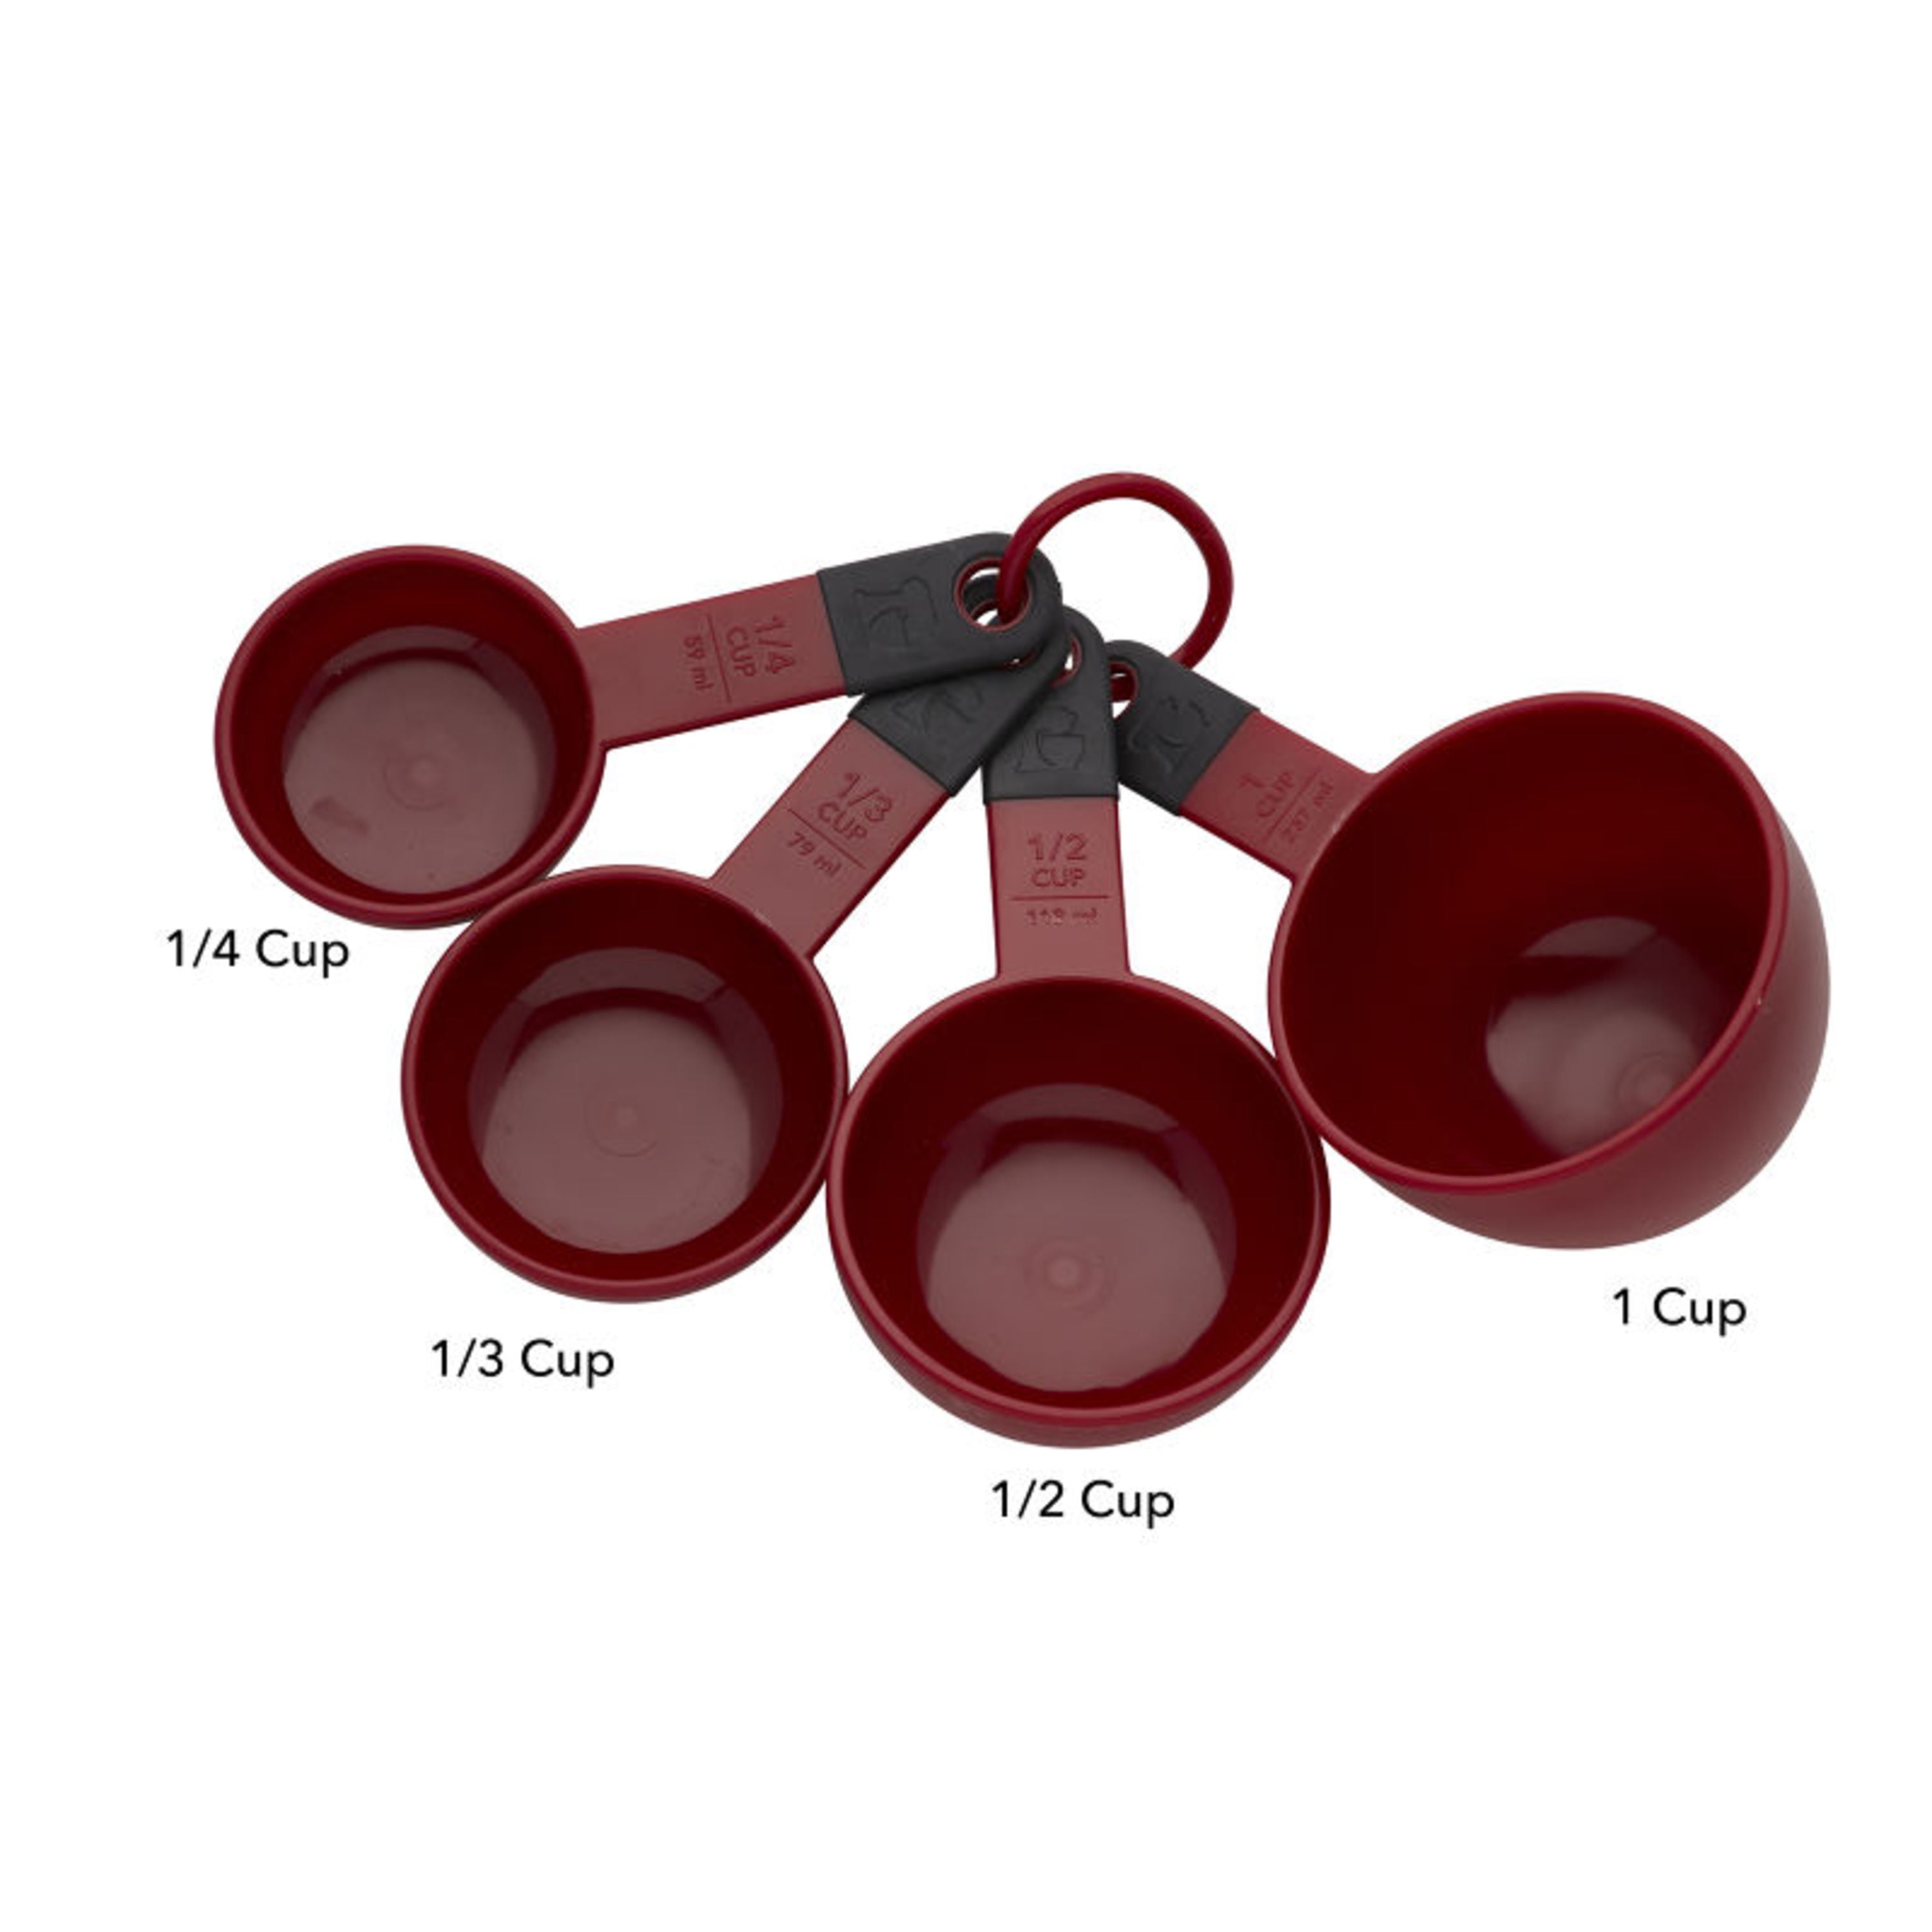 KitchenAid Classic Measuring Cups And Spoons Set, Set of 9, Aqua